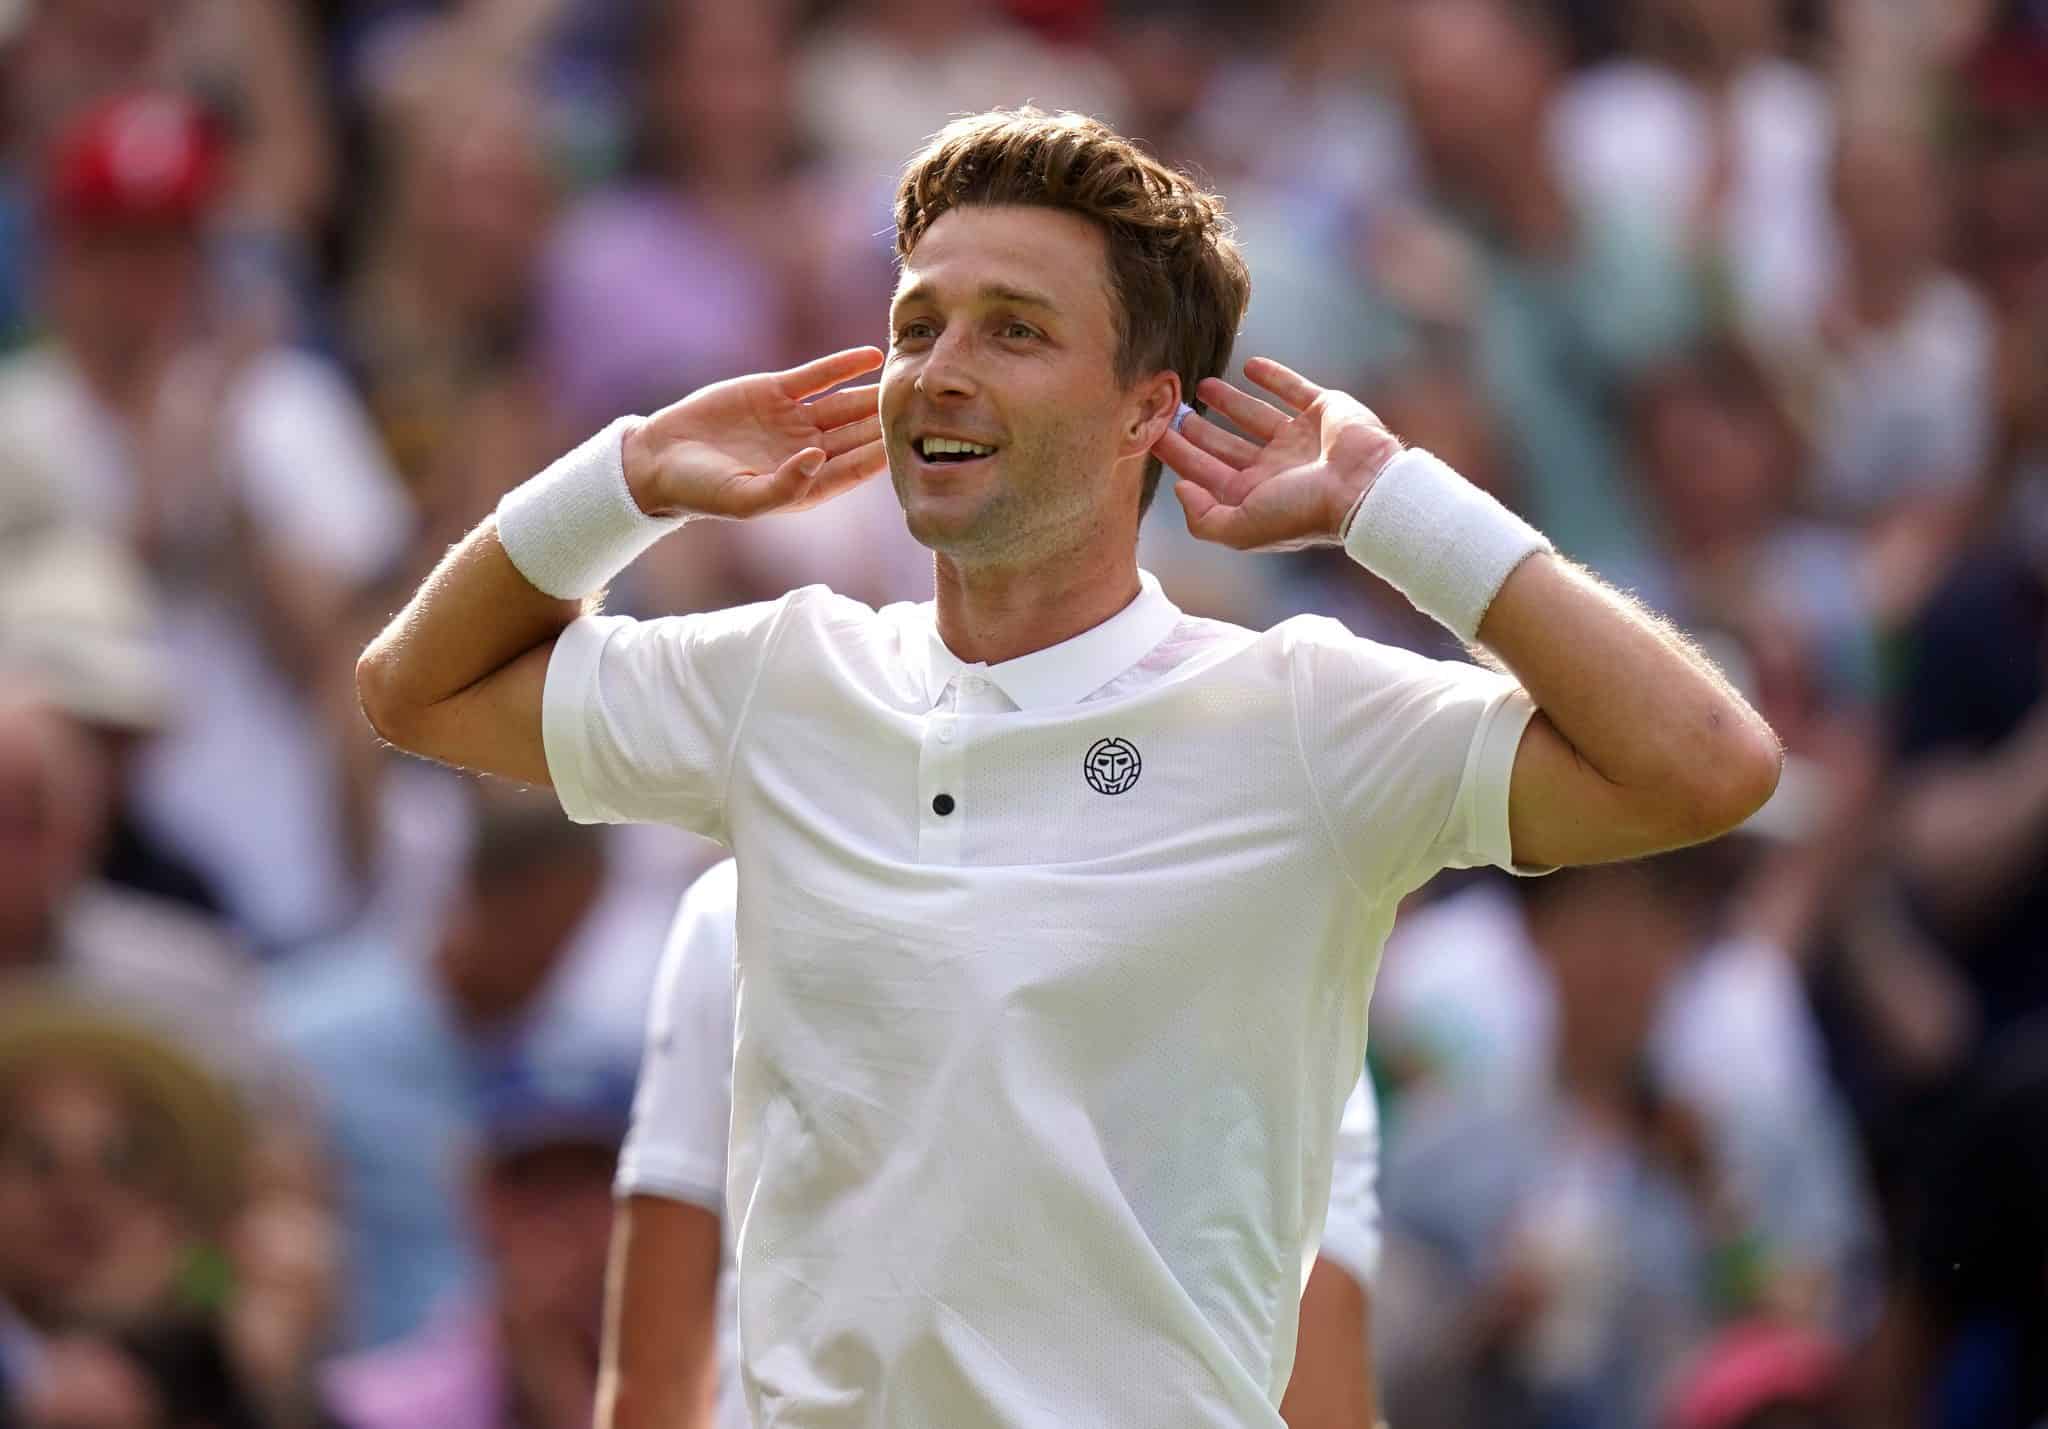 Liam Broady during a Wimbledon match.